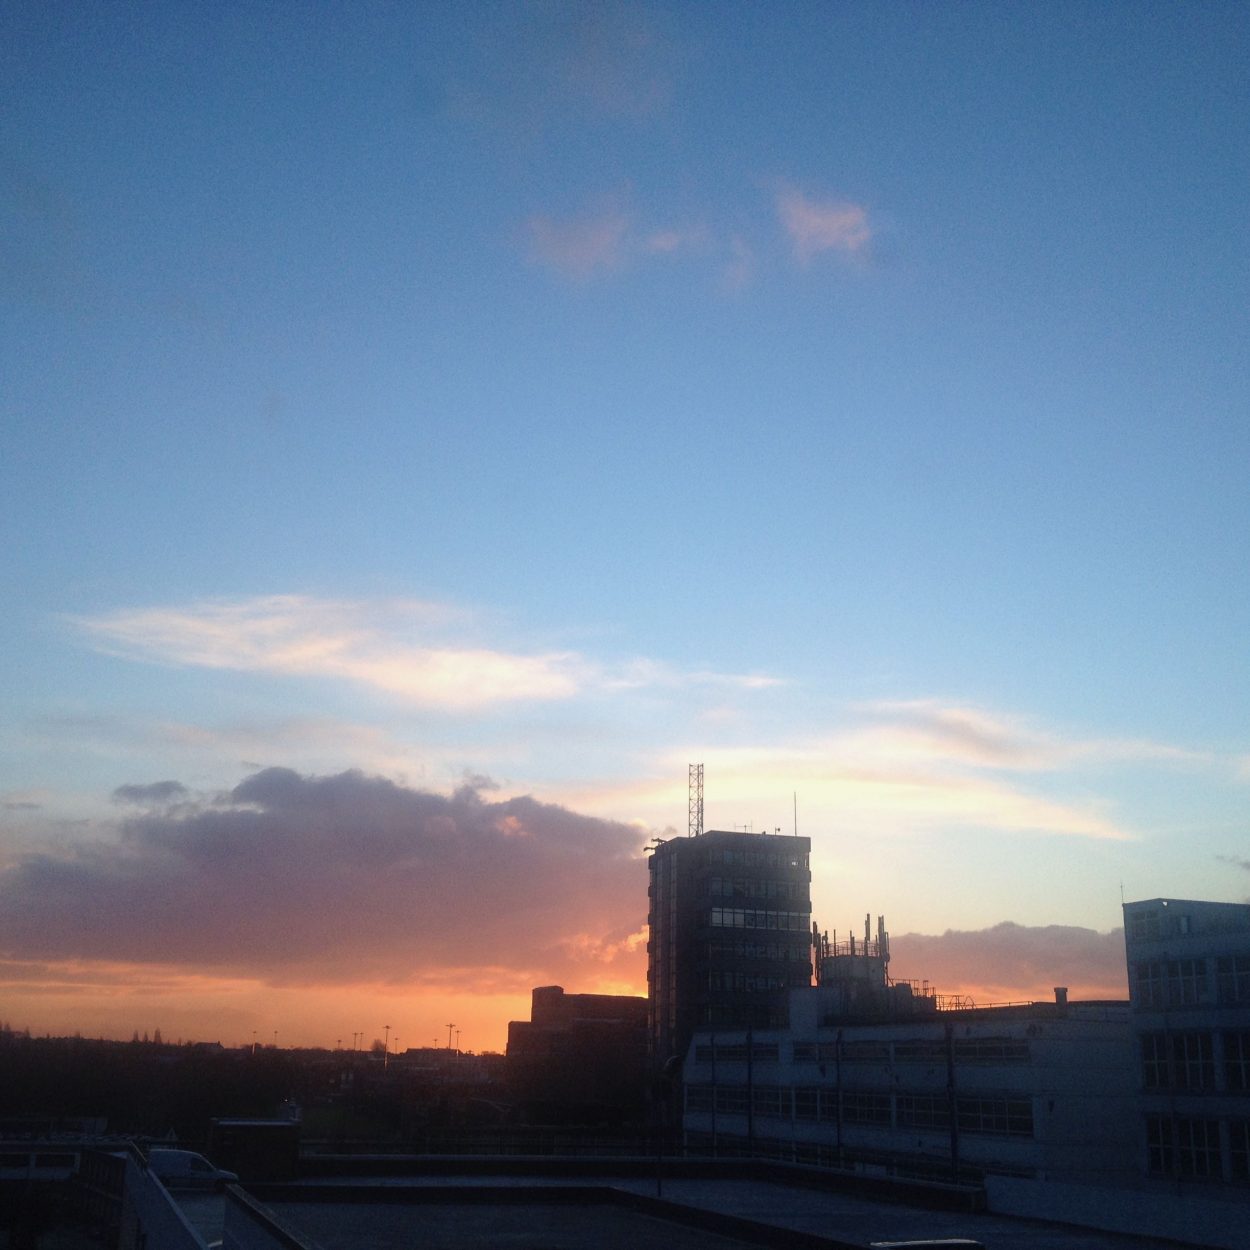 Sunrise over rooftops in Leeds